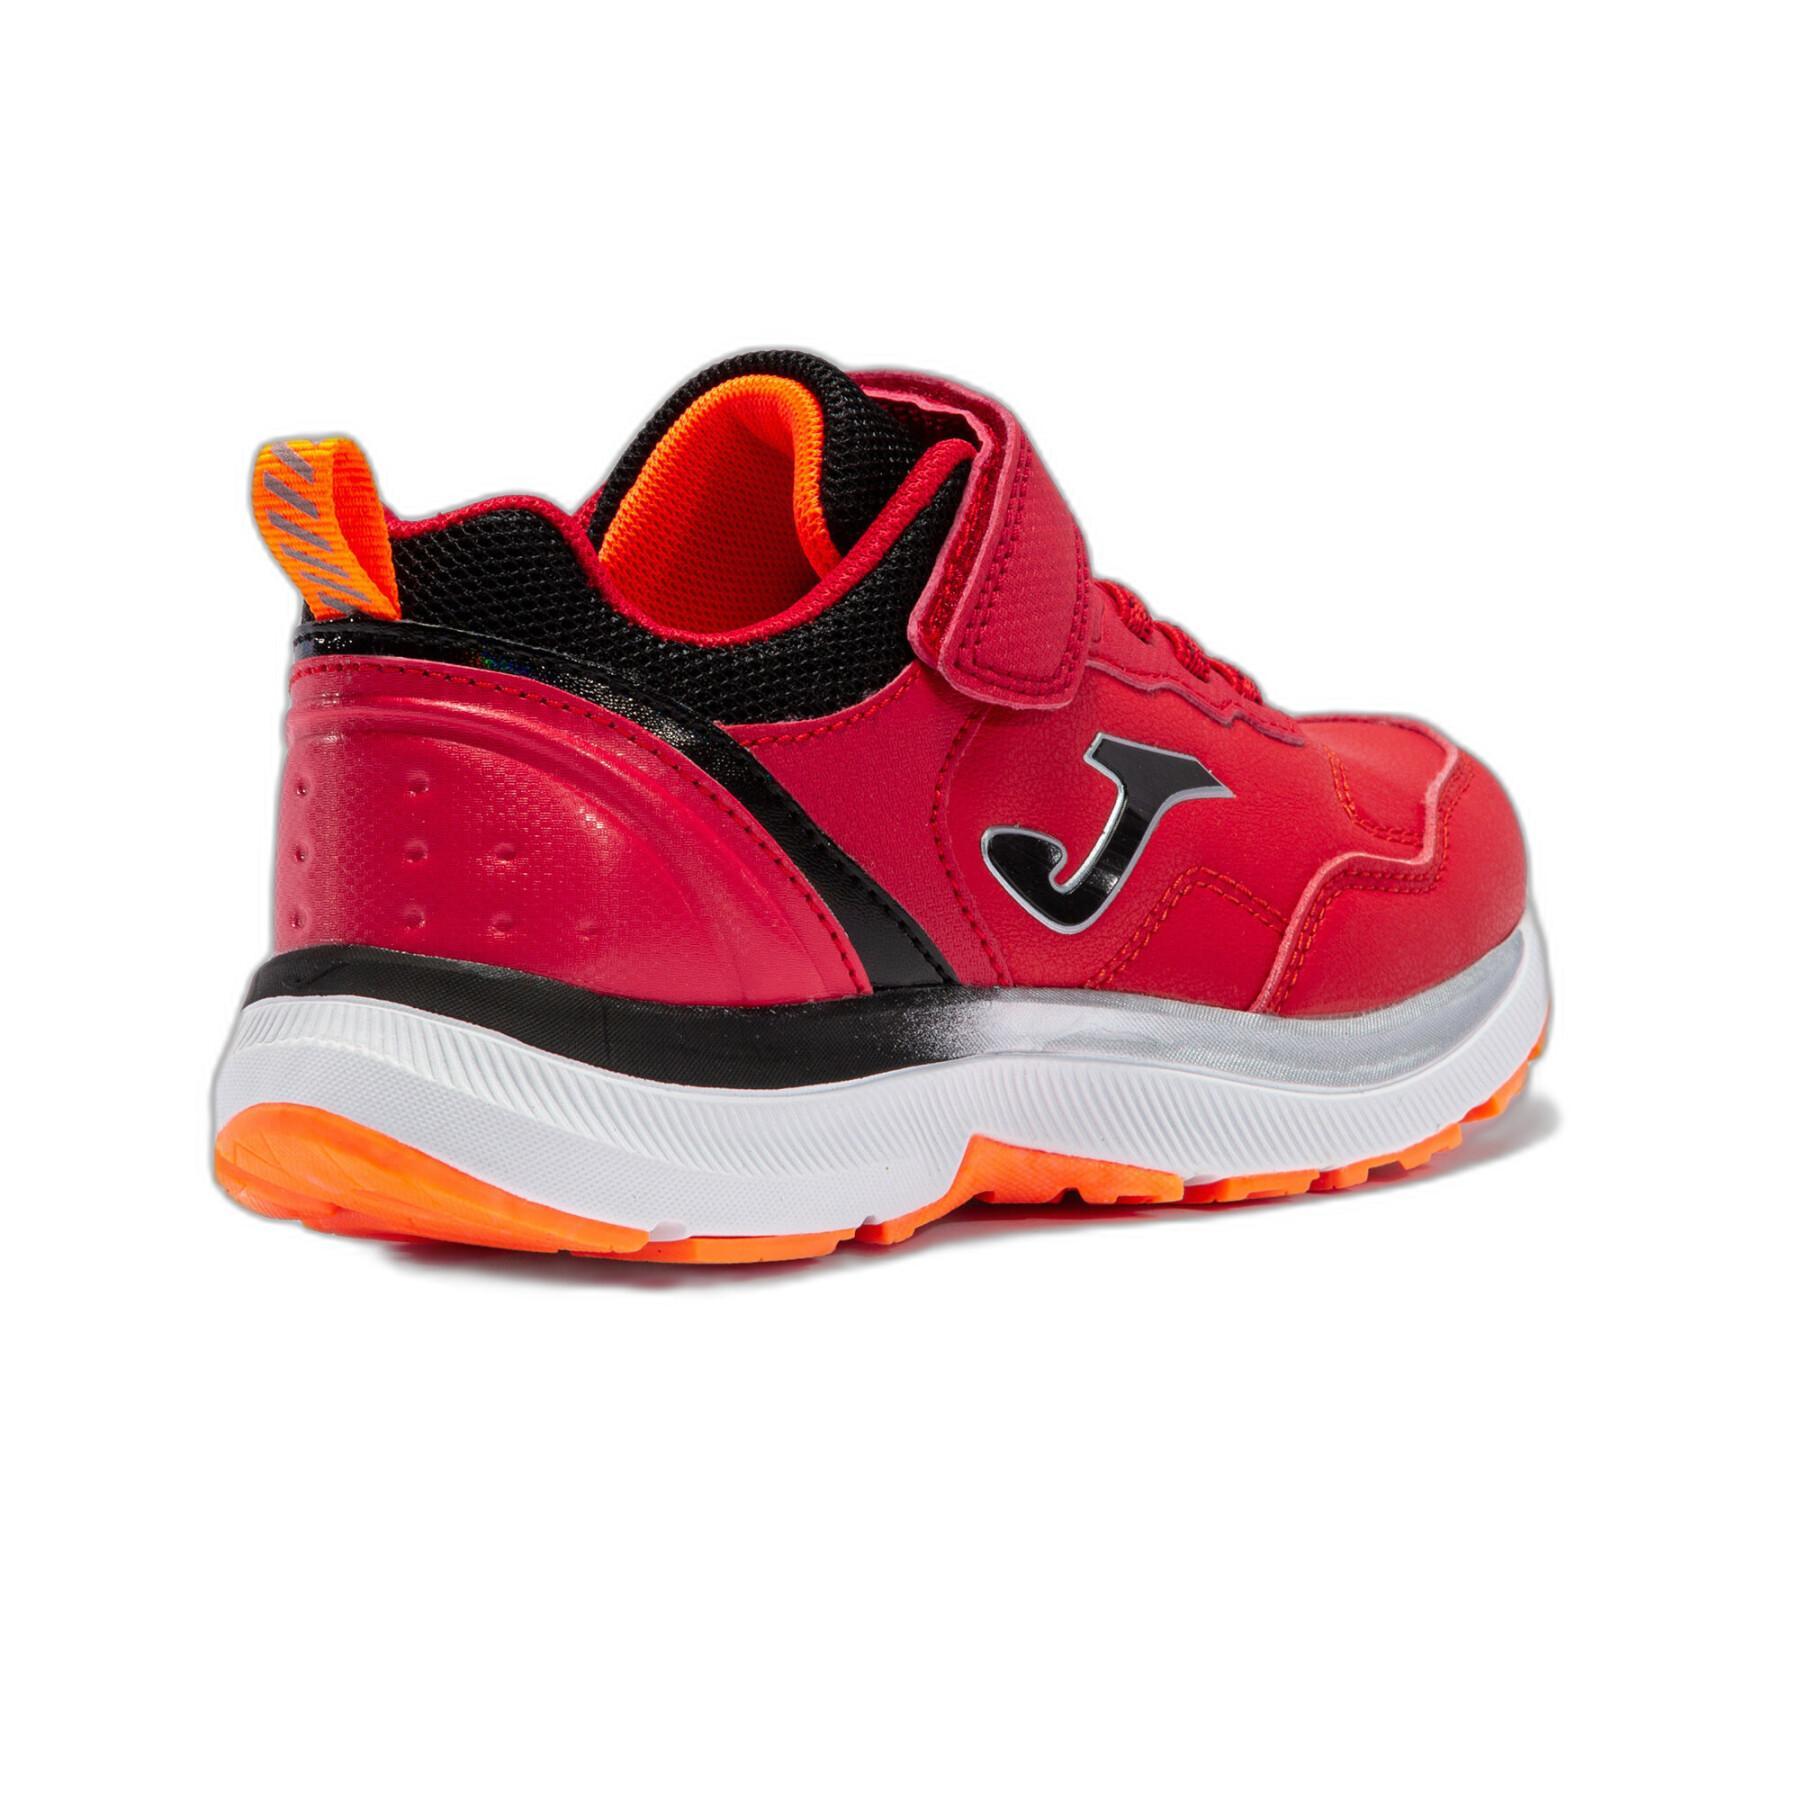 Chaussures de running enfant Joma Boro 2206